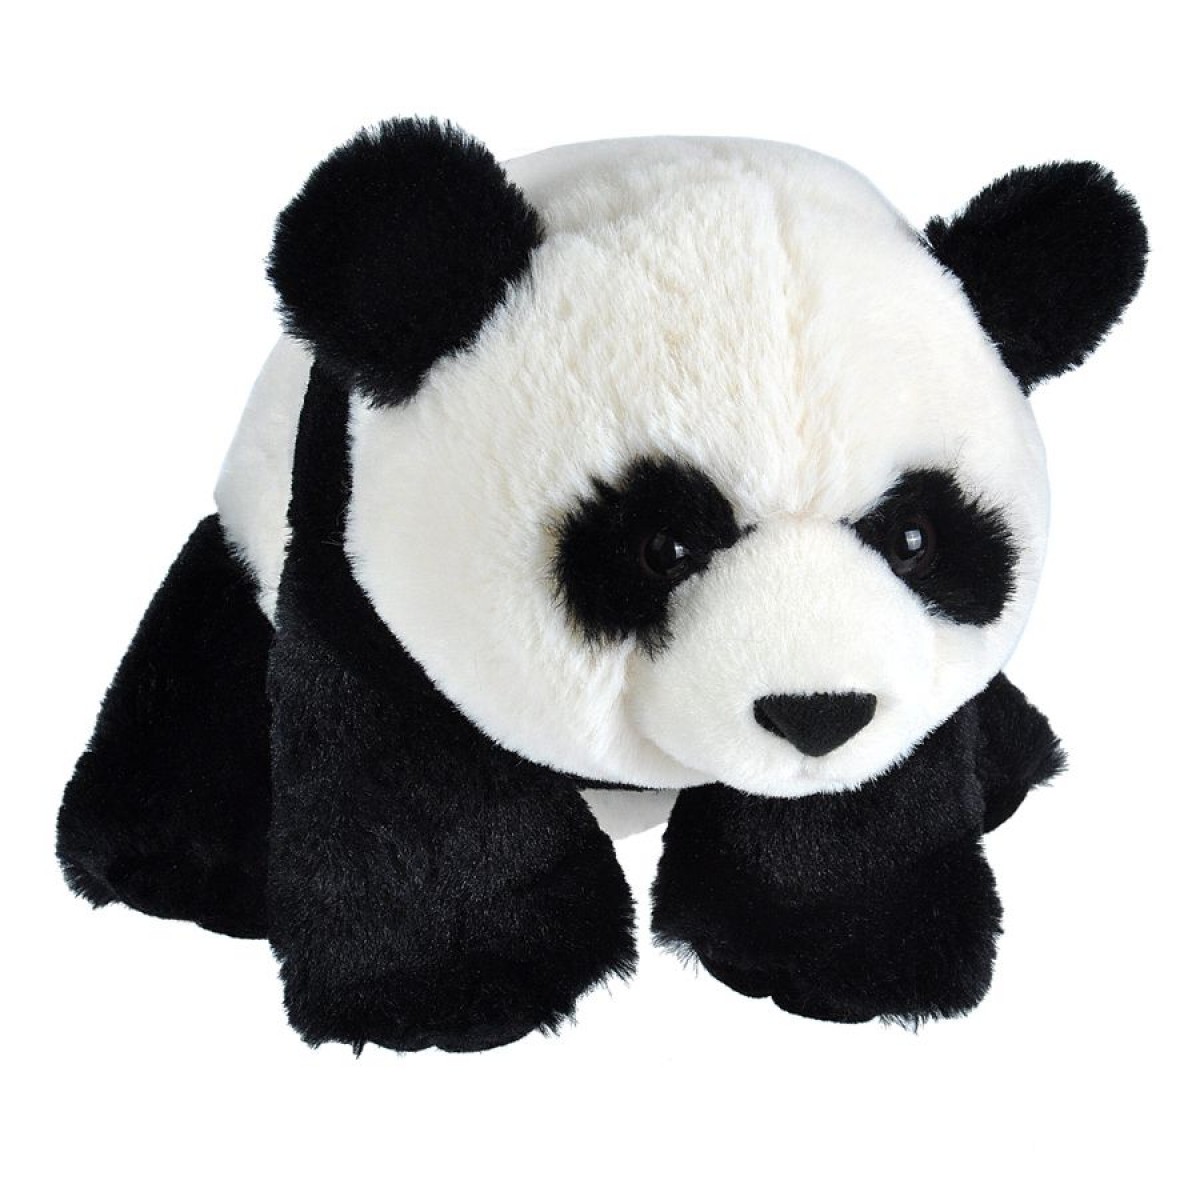 Cuddlekins Panda Baby 12 Inch | Teddy Bears, Beanie Boos & Soft Toys ...